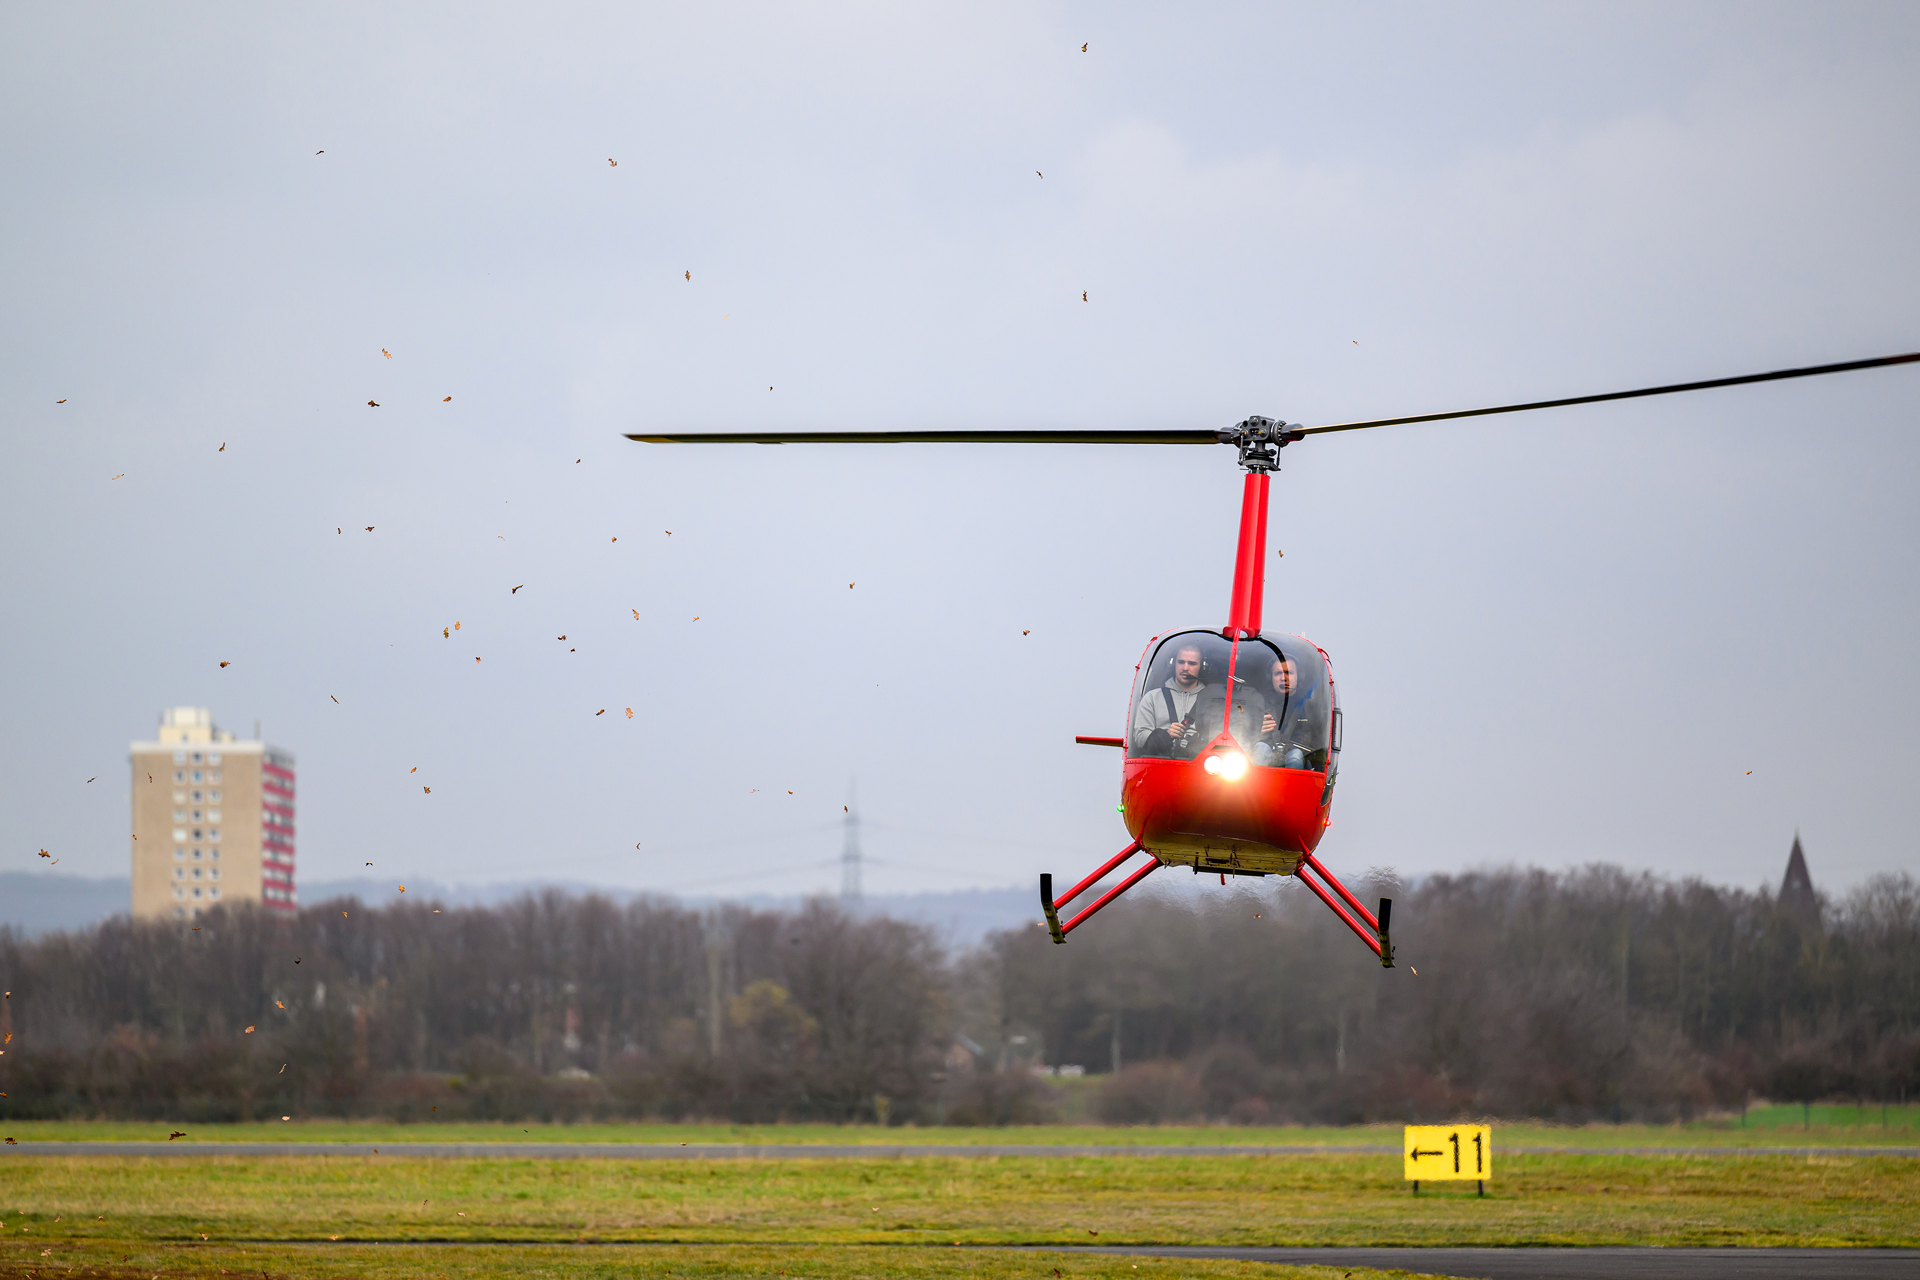 AIR LLOYD - R44 Helikopter in der Luft